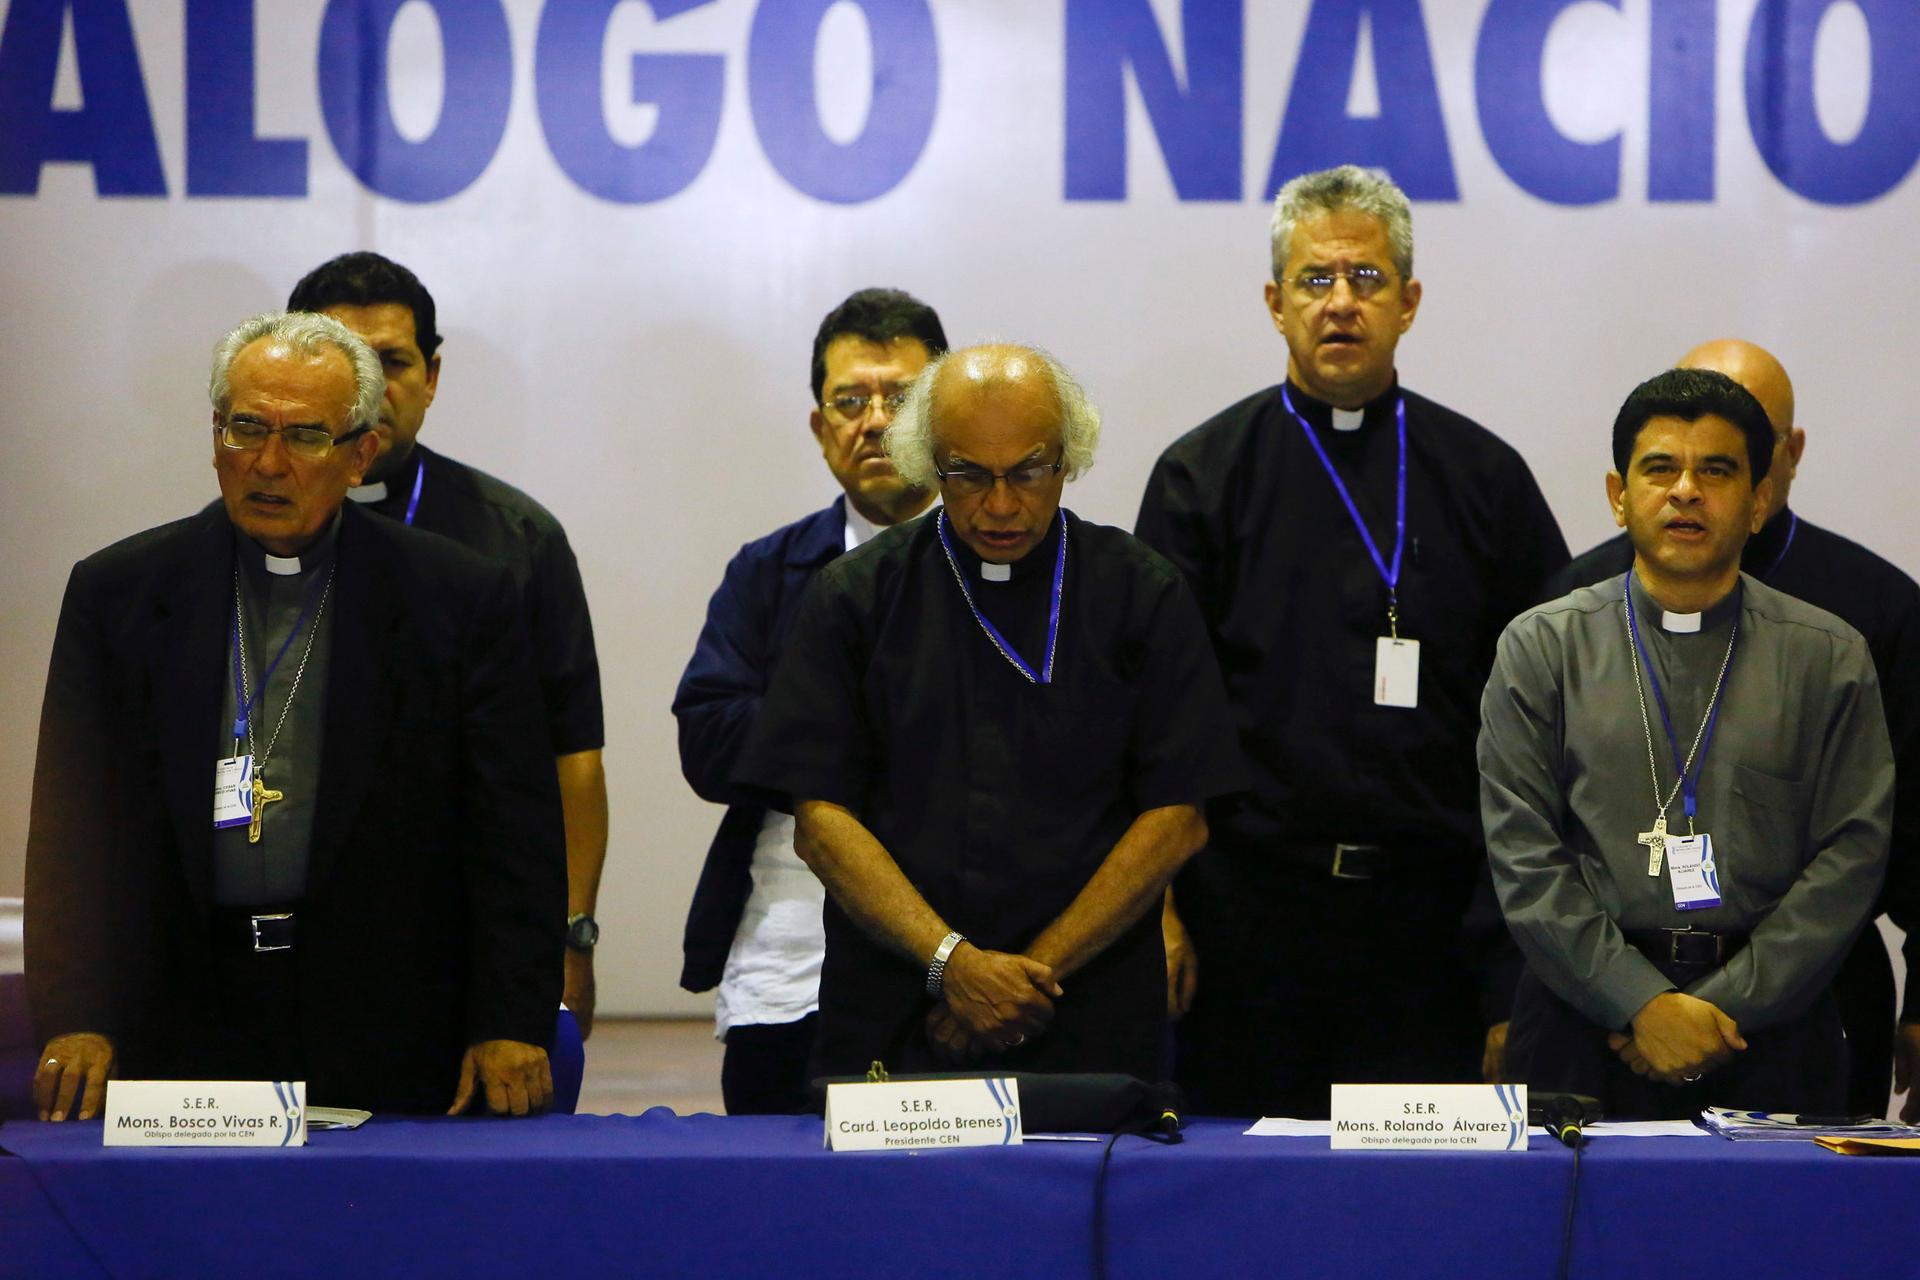 Bishop Cesar Bosco Vivas Robelo, left, Cardinal Leopoldo Brenes, center, and Bishop Rolando Alvarez, pray at the end of the third day of the national dialogue in Managua, Nicaragua, May 21, 2018.